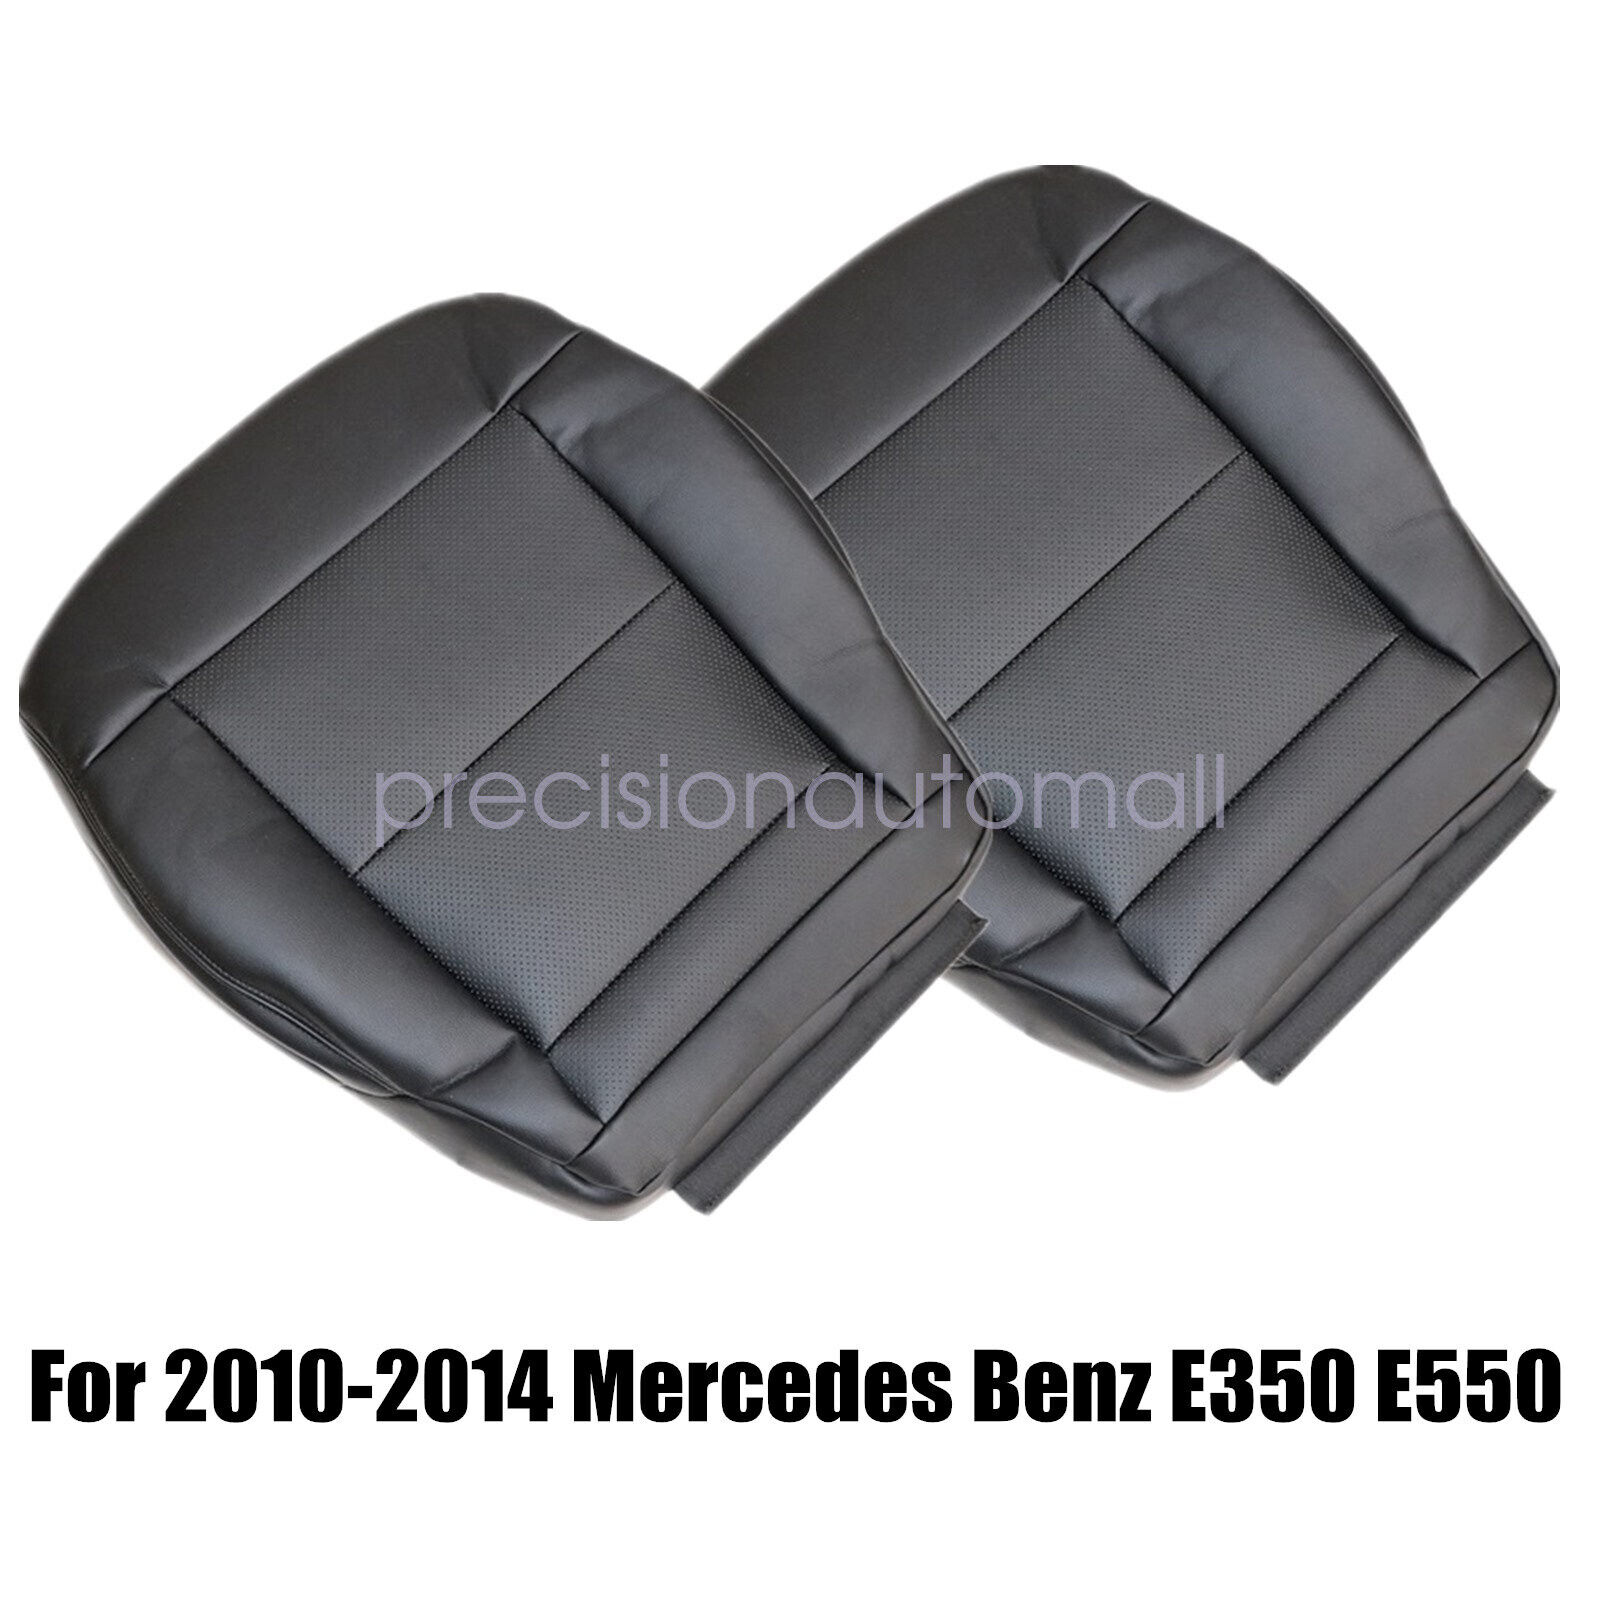 For Mercedes Benz E350 E550 2010-14 Driver & Passenger Leather Seat Cover Black